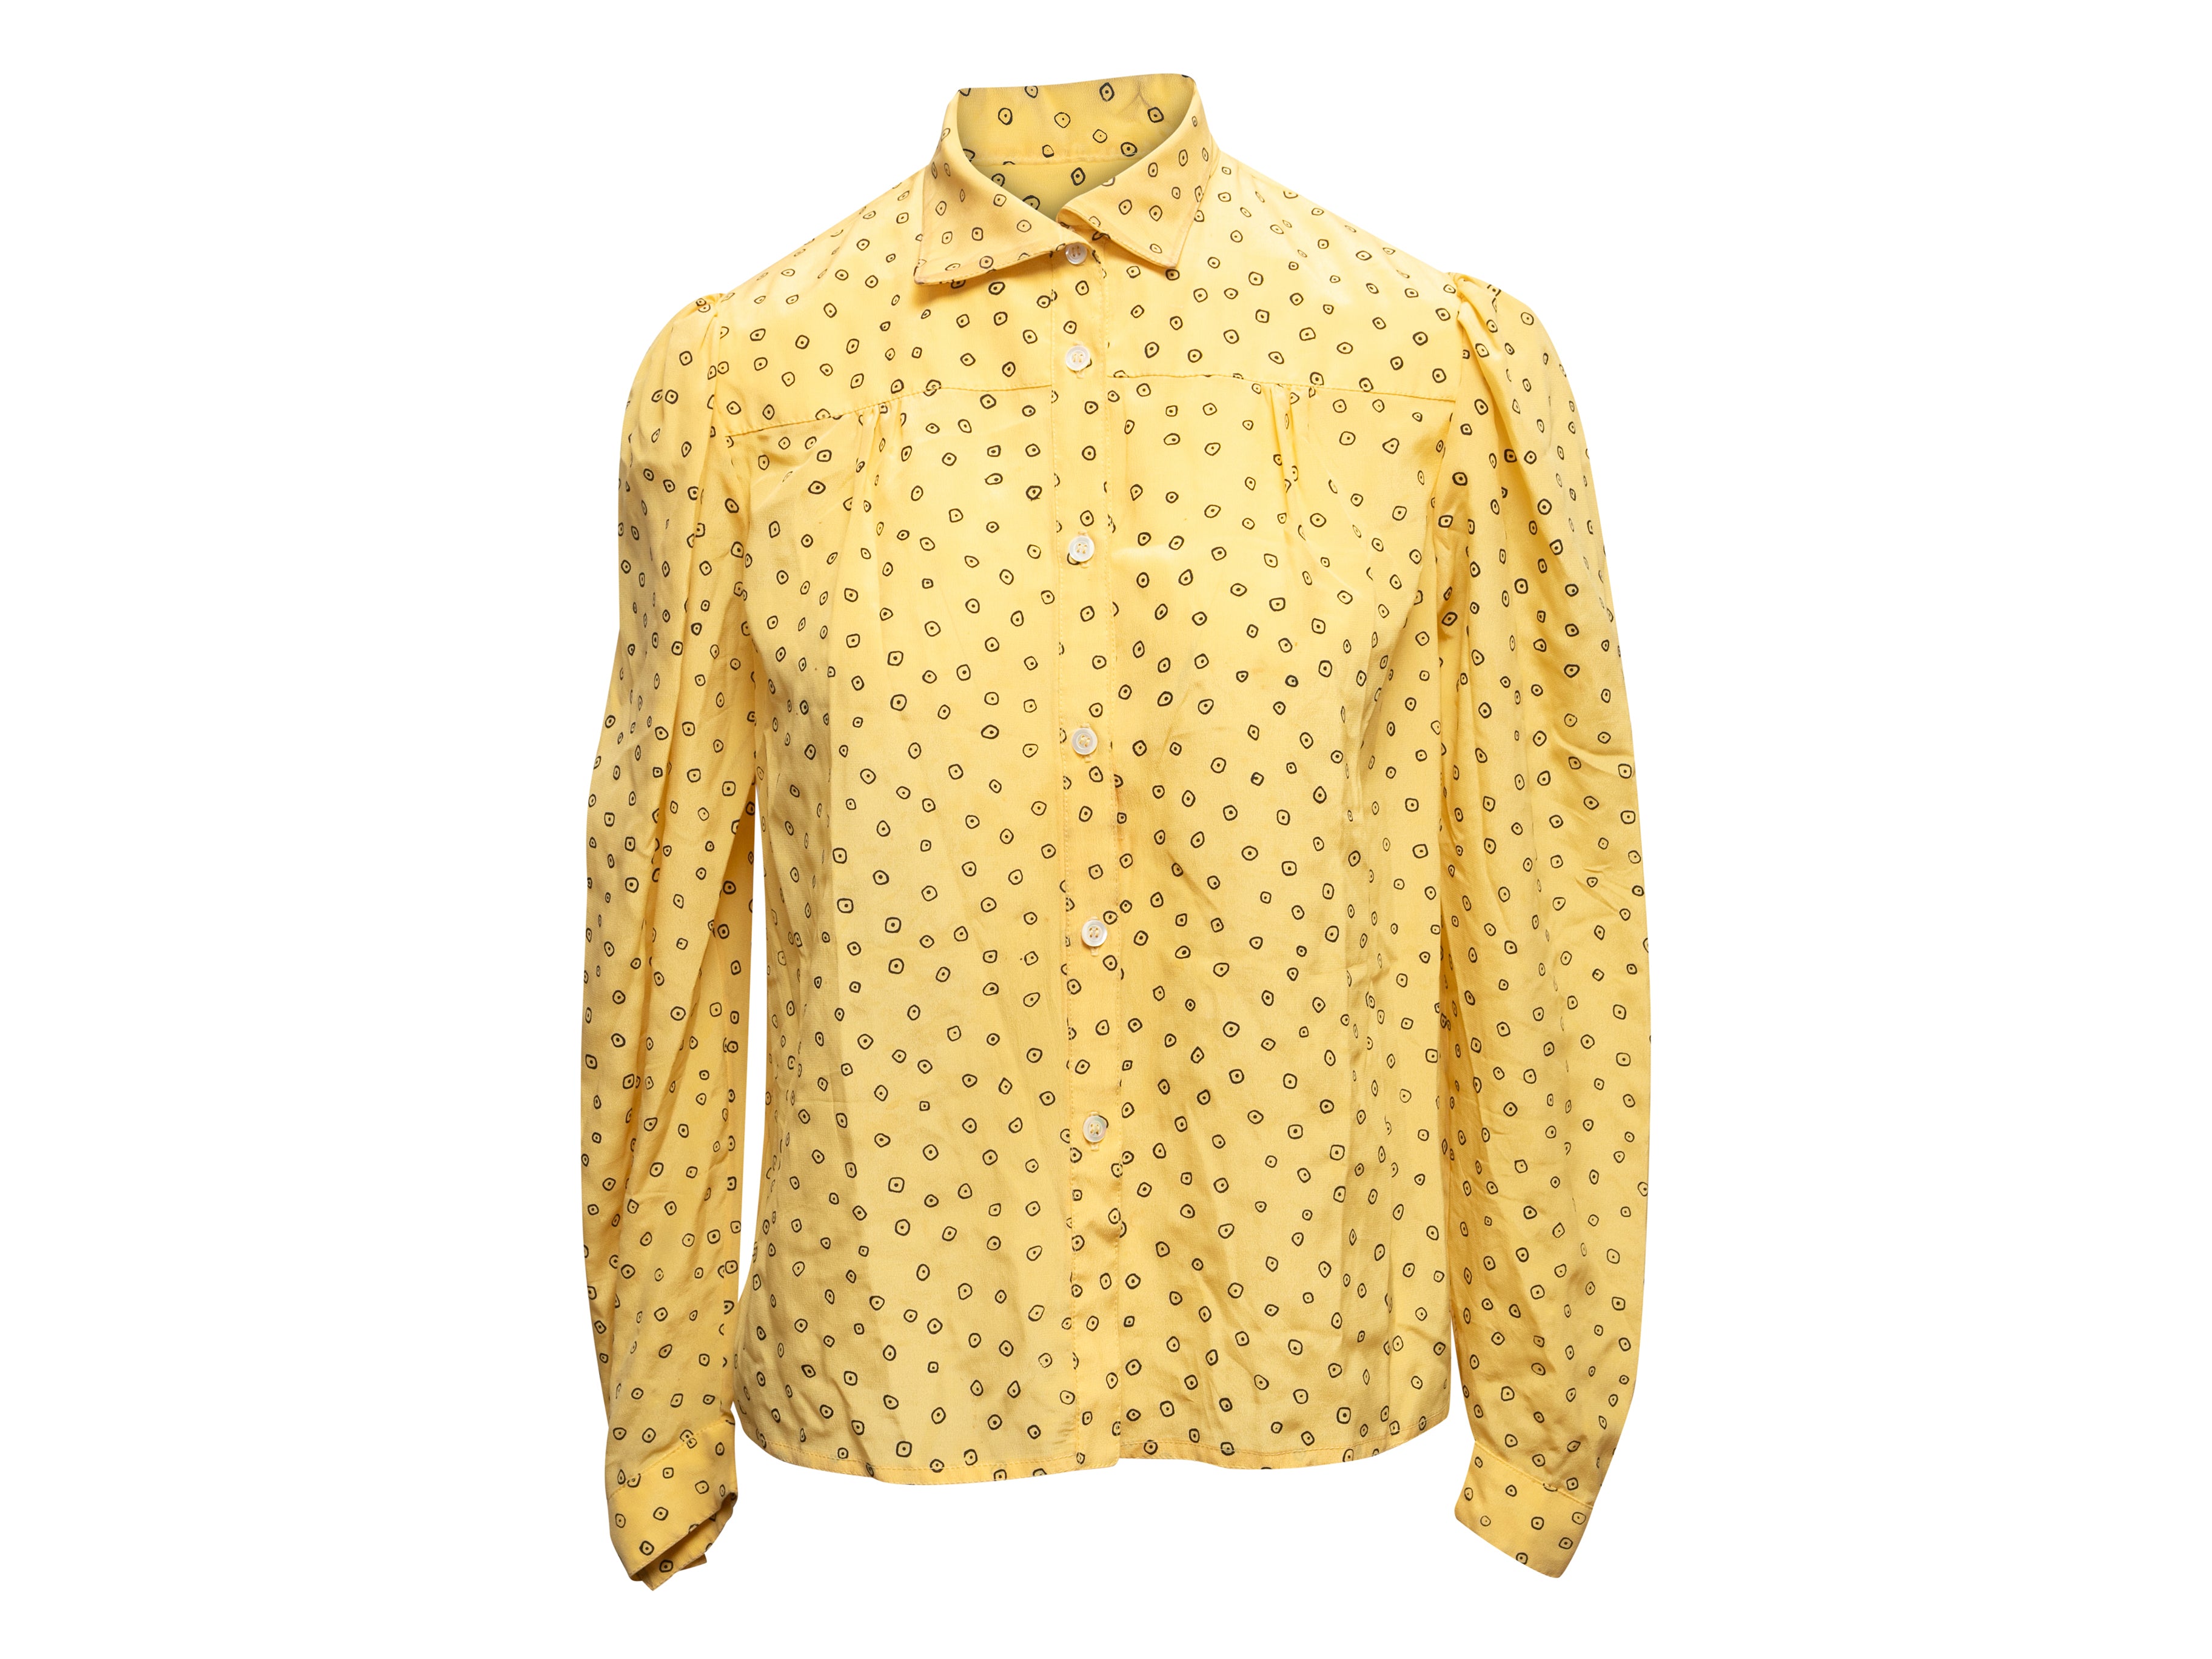 Vintage Yellow & Black Jan Vanvelden Printed Silk Blouse Size US S/M - Designer Revival